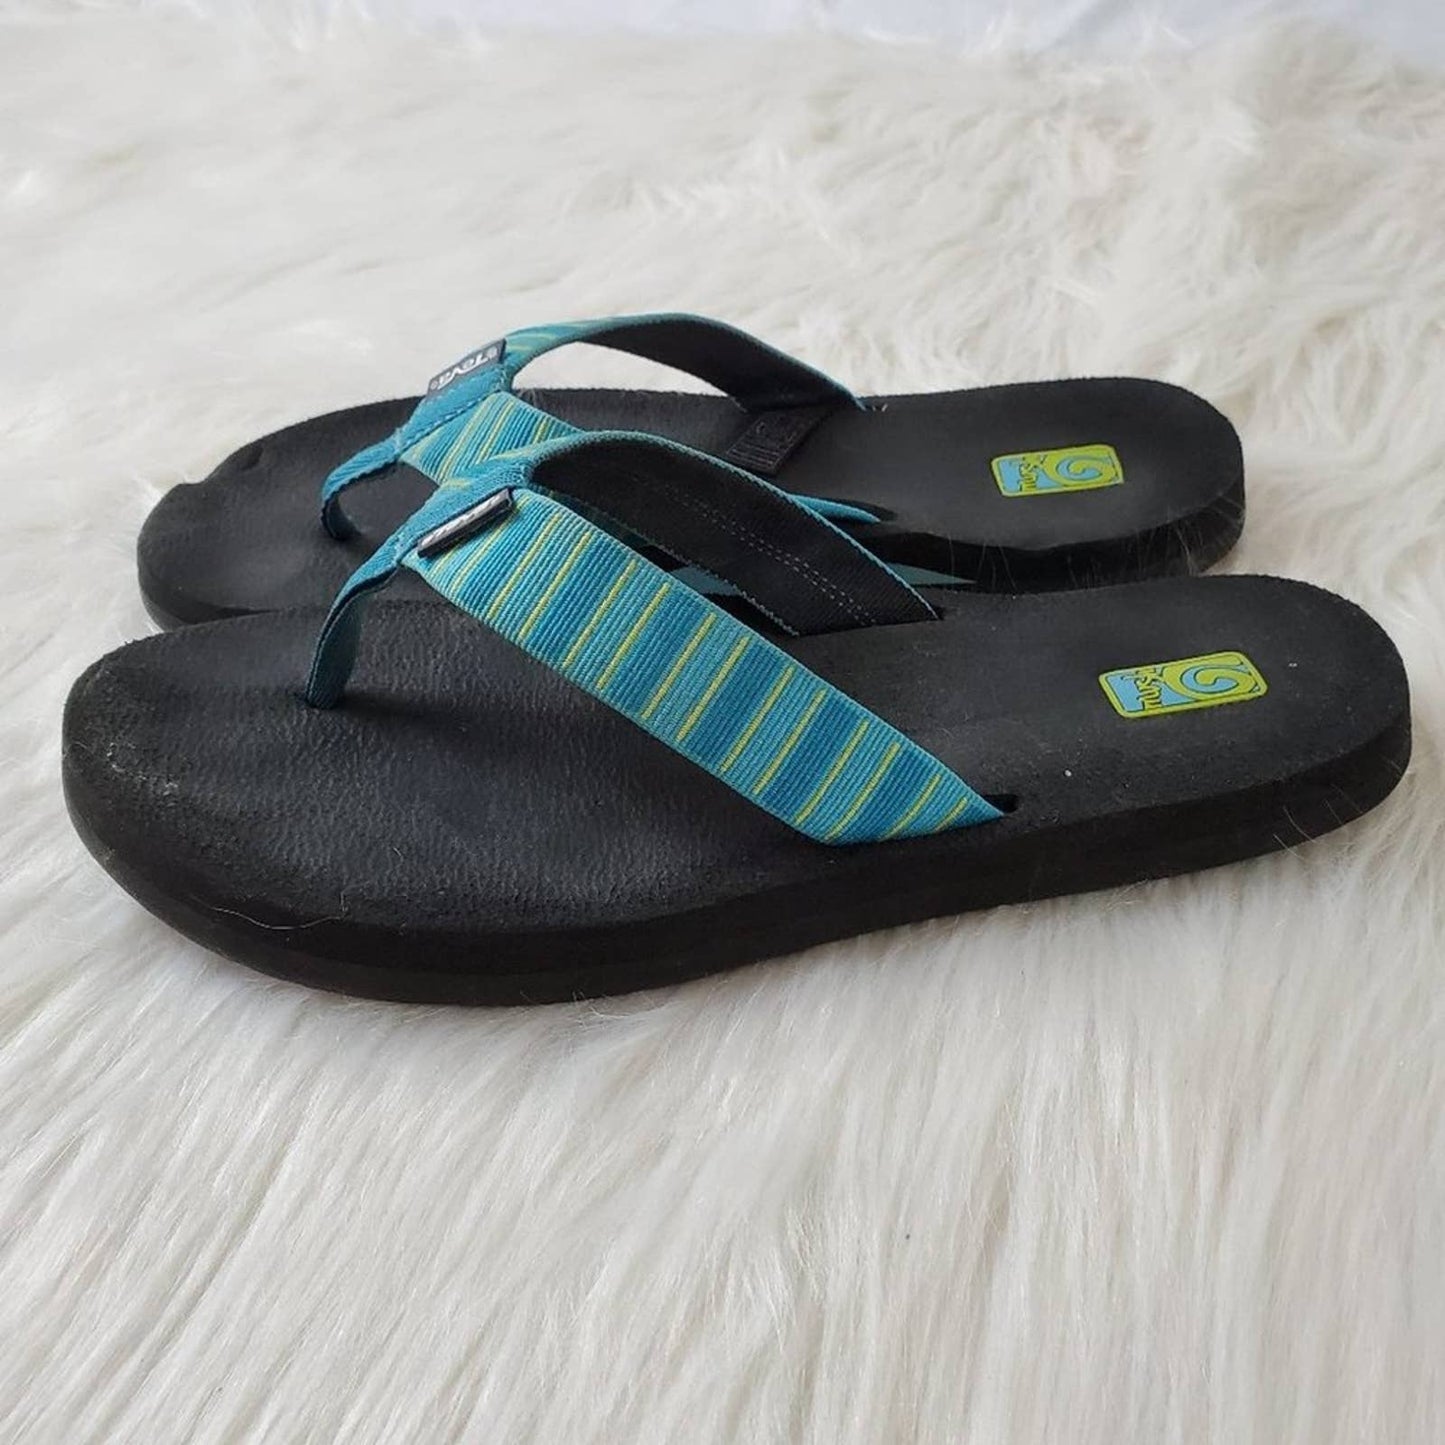 Teva Mush II Flip Flop Sandals - 10